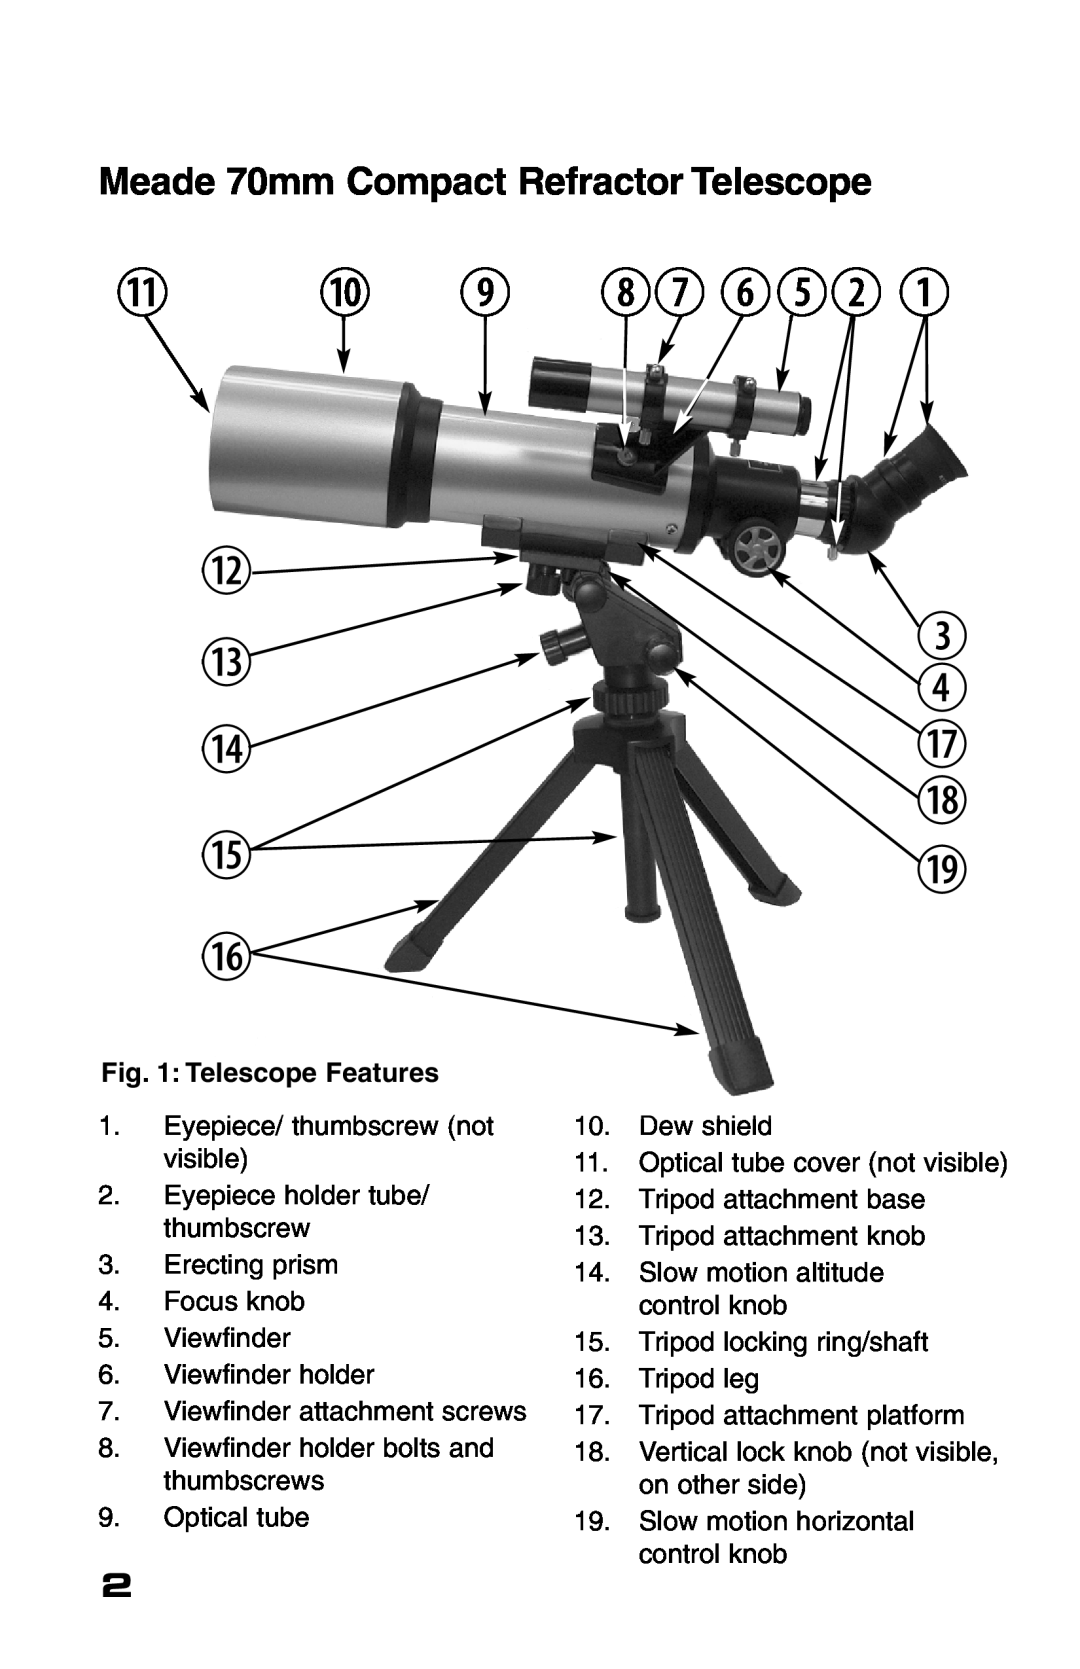 Meade 70AZ-T instruction manual Meade 70mm Compact Refractor Telescope, Telescope Features, 1! 1 j ih gfc b, 1$1& 1 1%1 